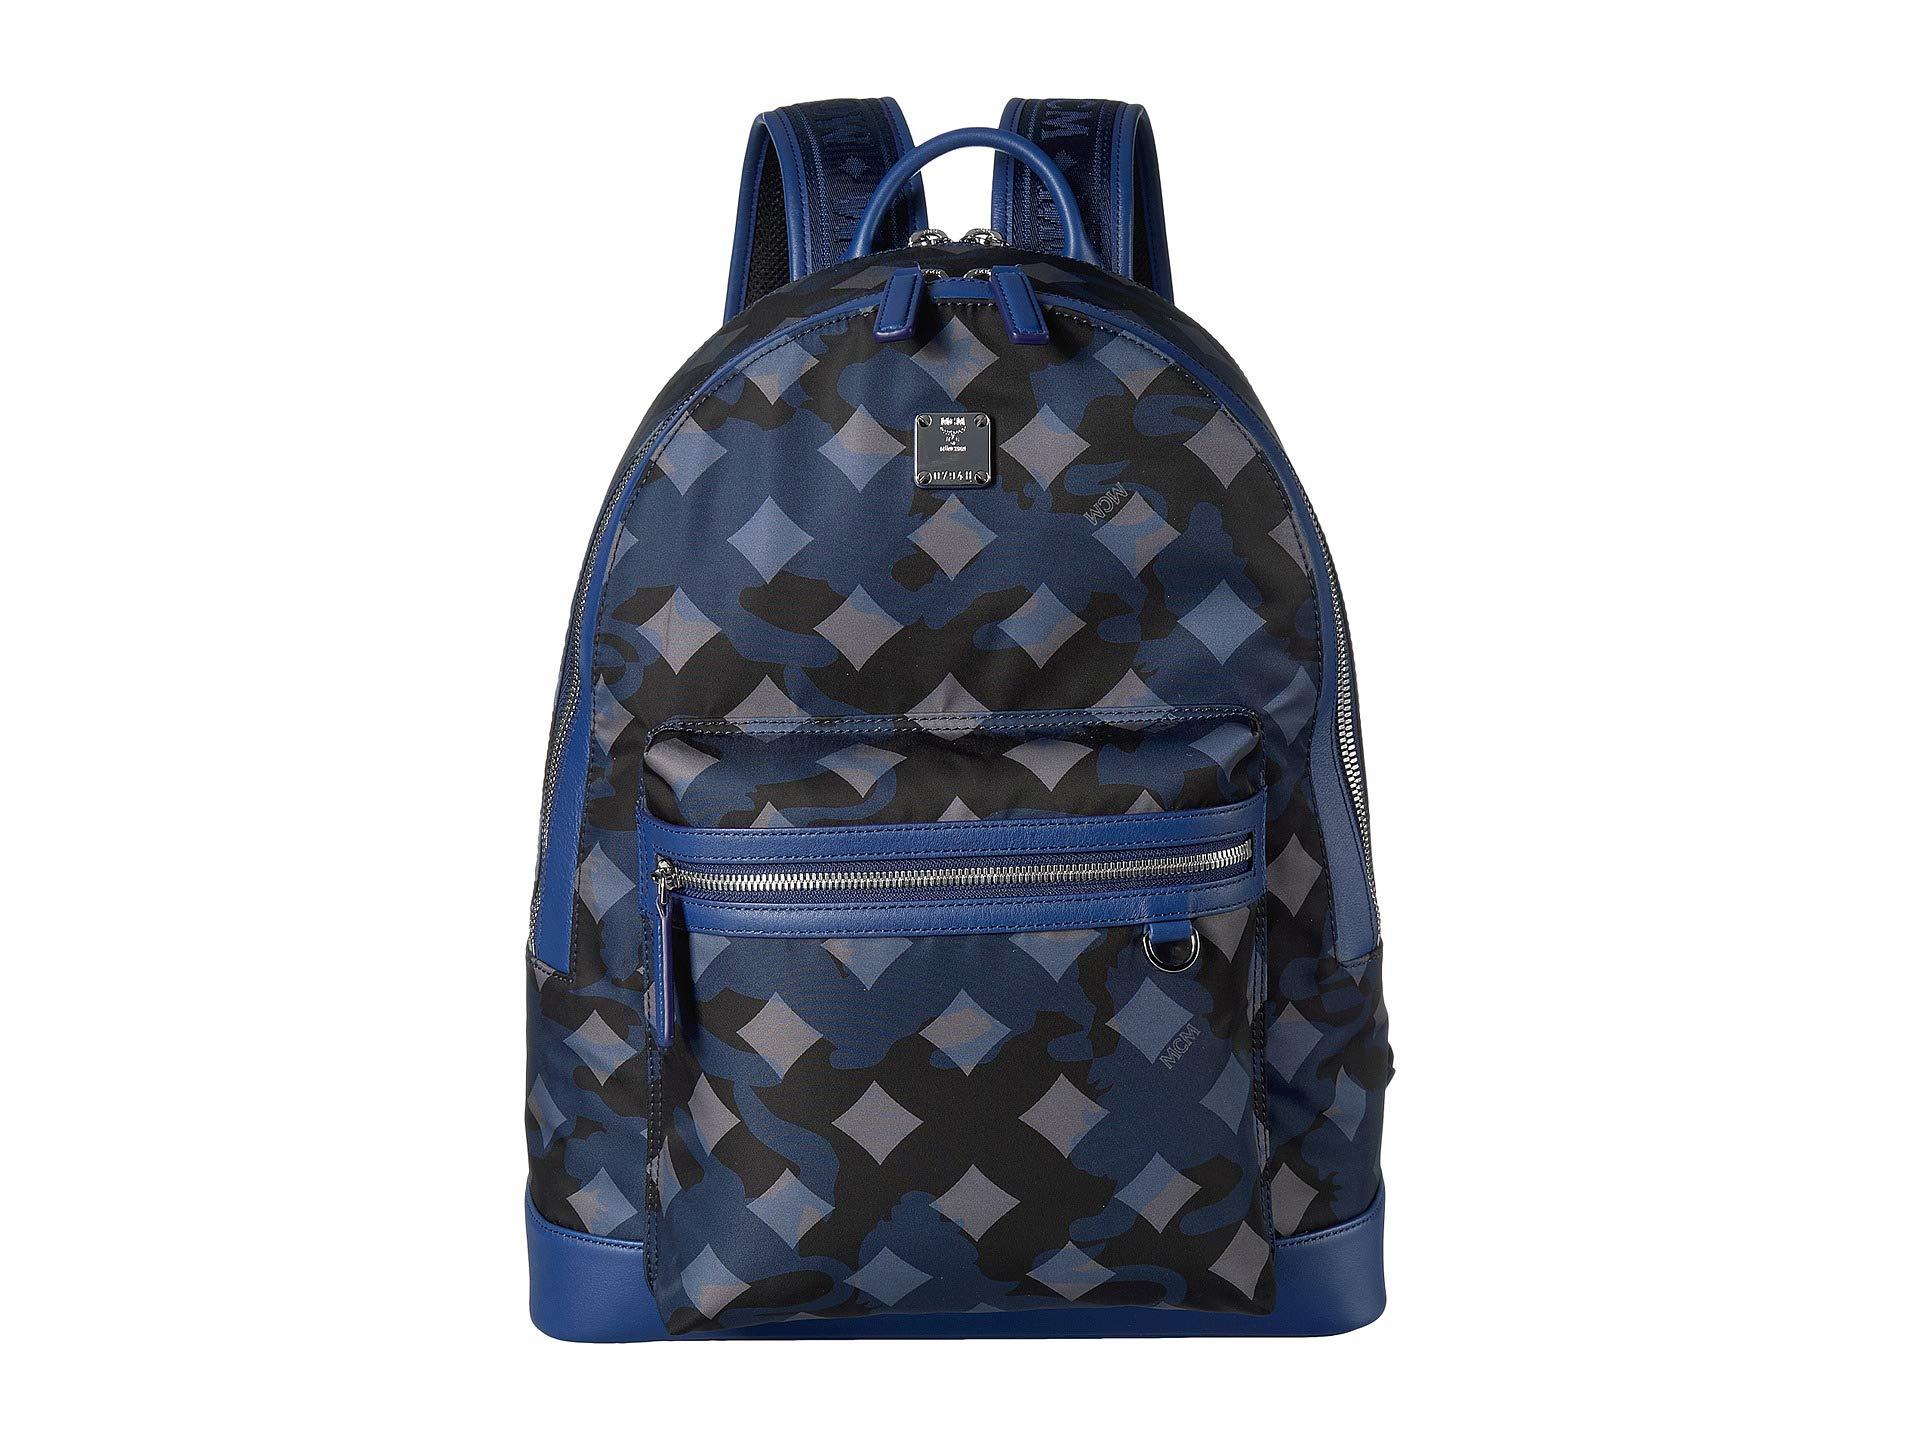 MCM Luft Nylon Backpack in Blue